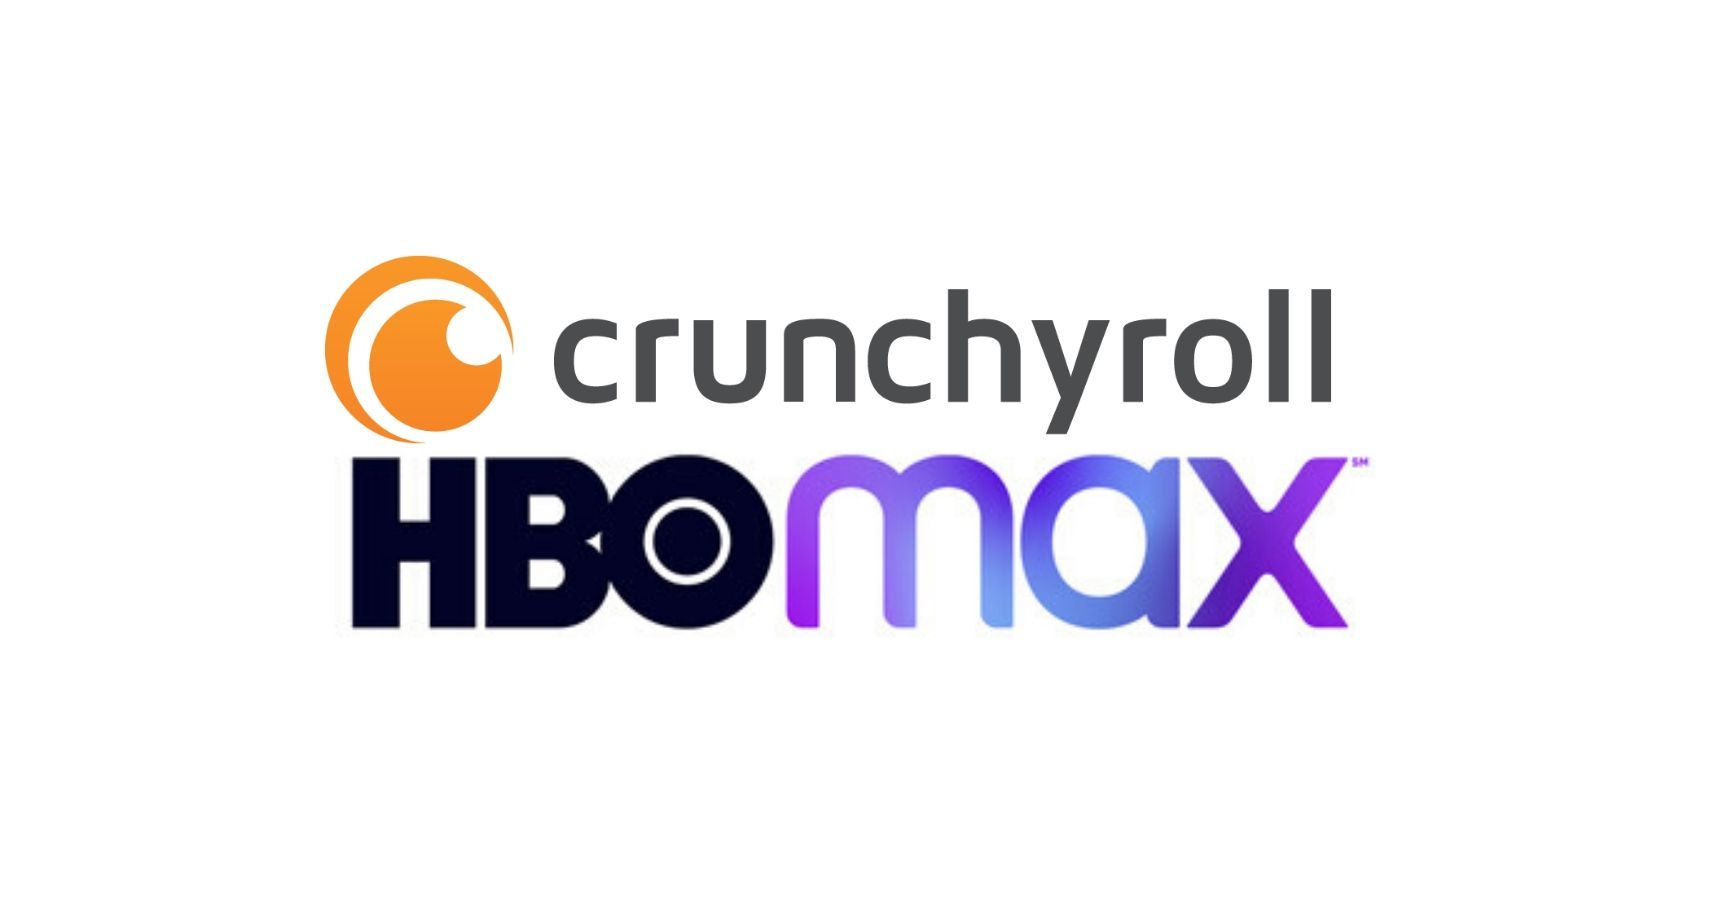 HBO Max & Crunchyroll Anime Titles: Fullmetal Alchemist